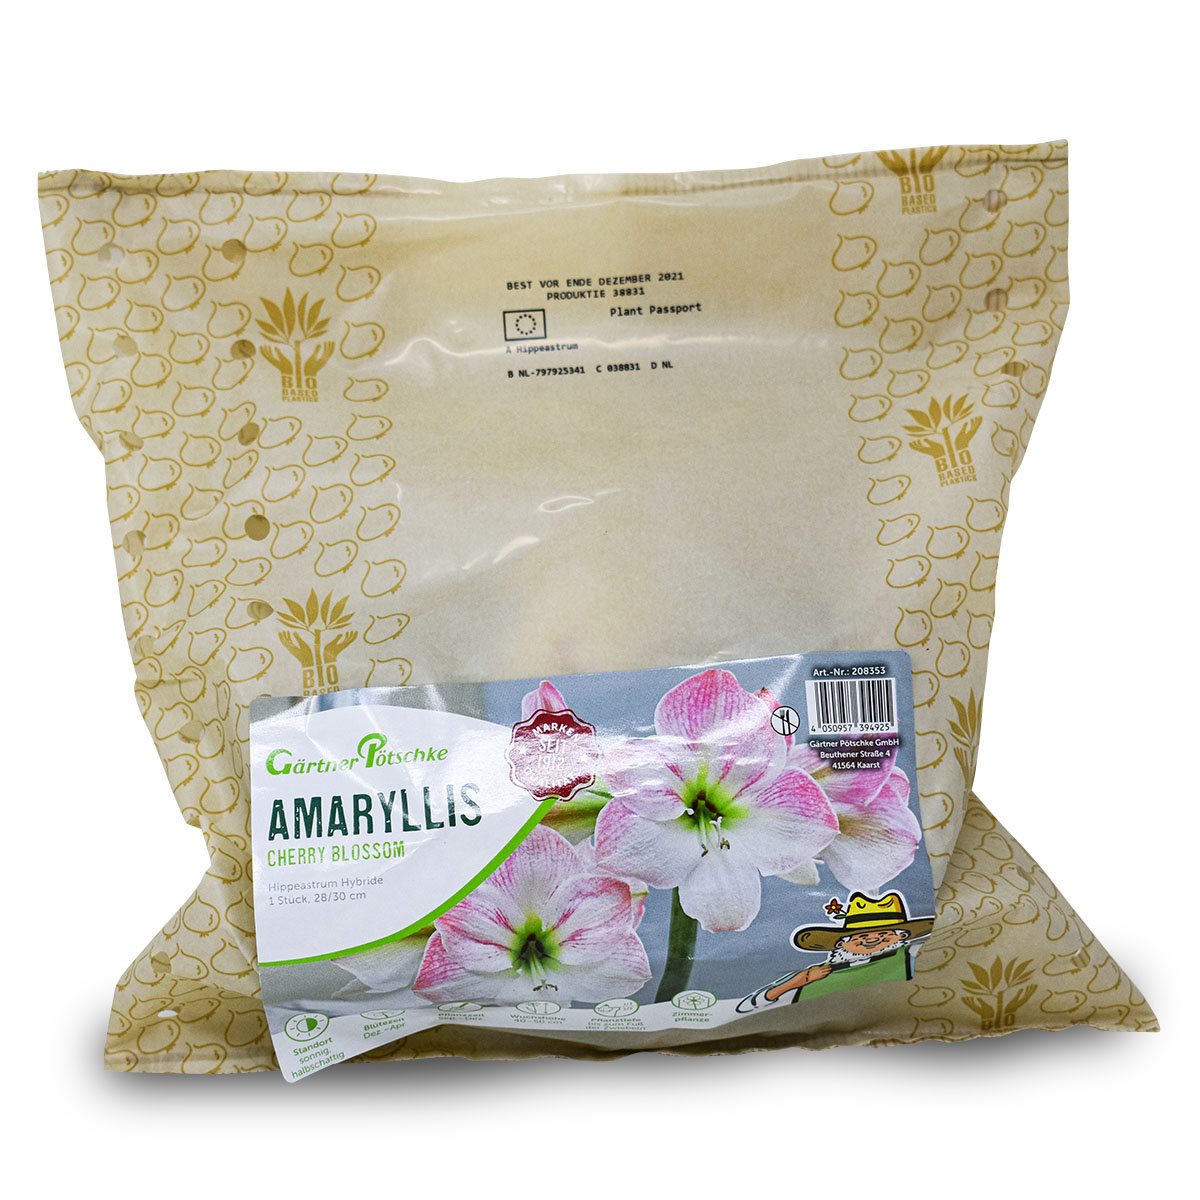 Amaryllis Cherry Bloss
| #6